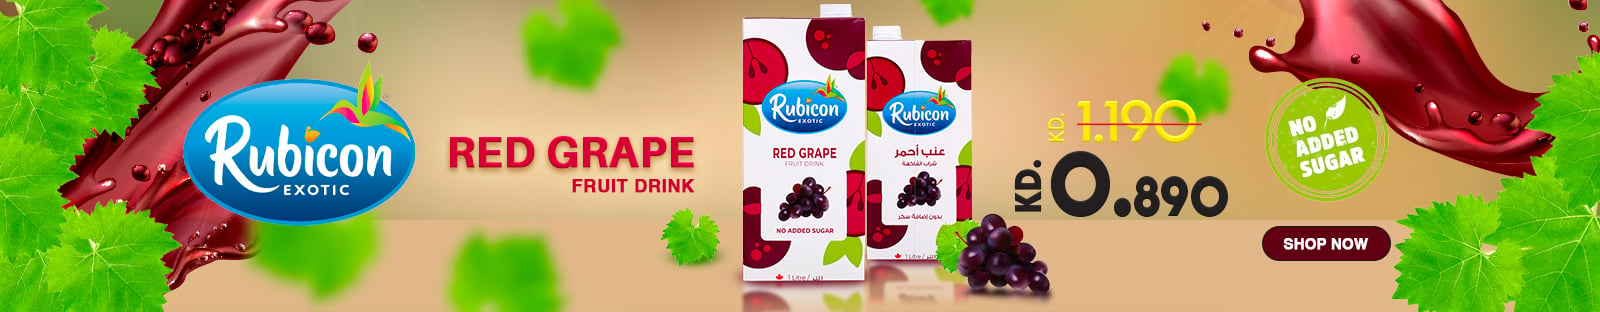 Rubicon-Drinkk-Site.jpg